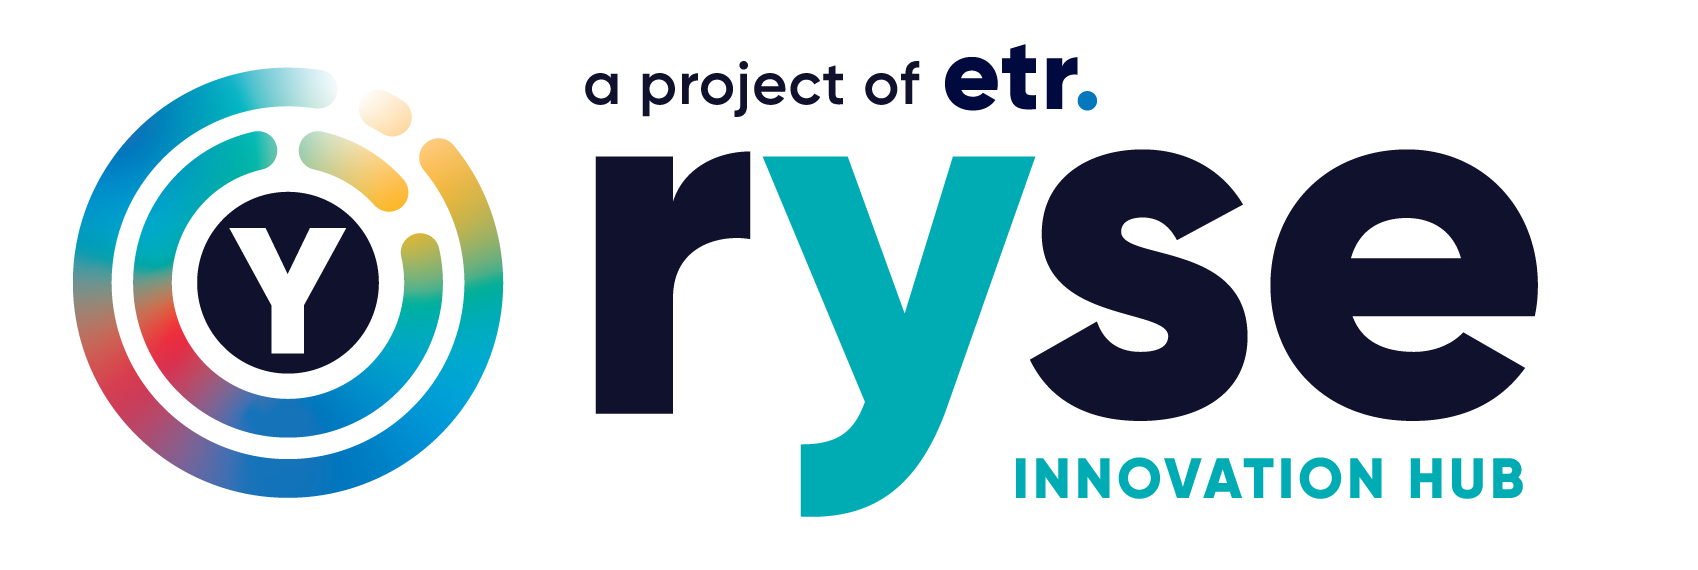 ryse Innovation Hub logo, a project of etr.